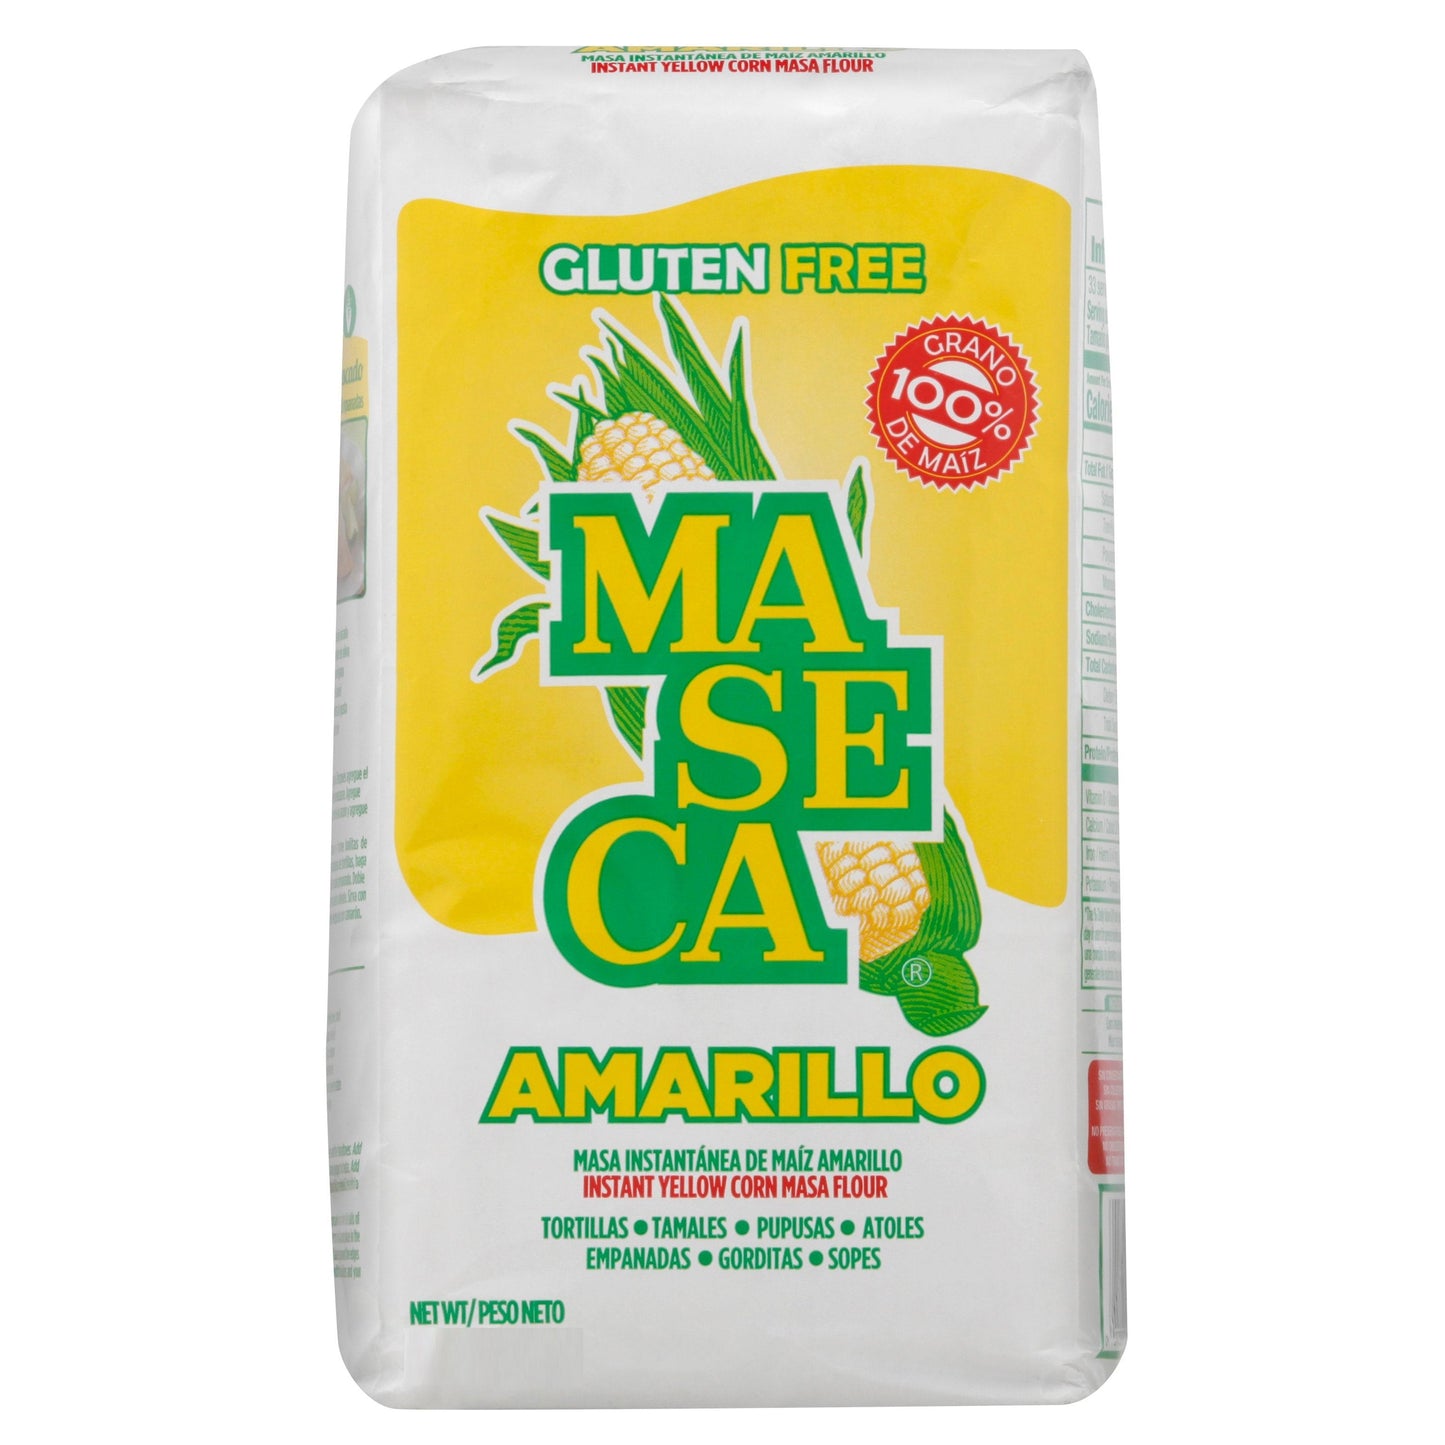 Maseca Amarillo - Instant Yellow Corn Masa Flour 2lb